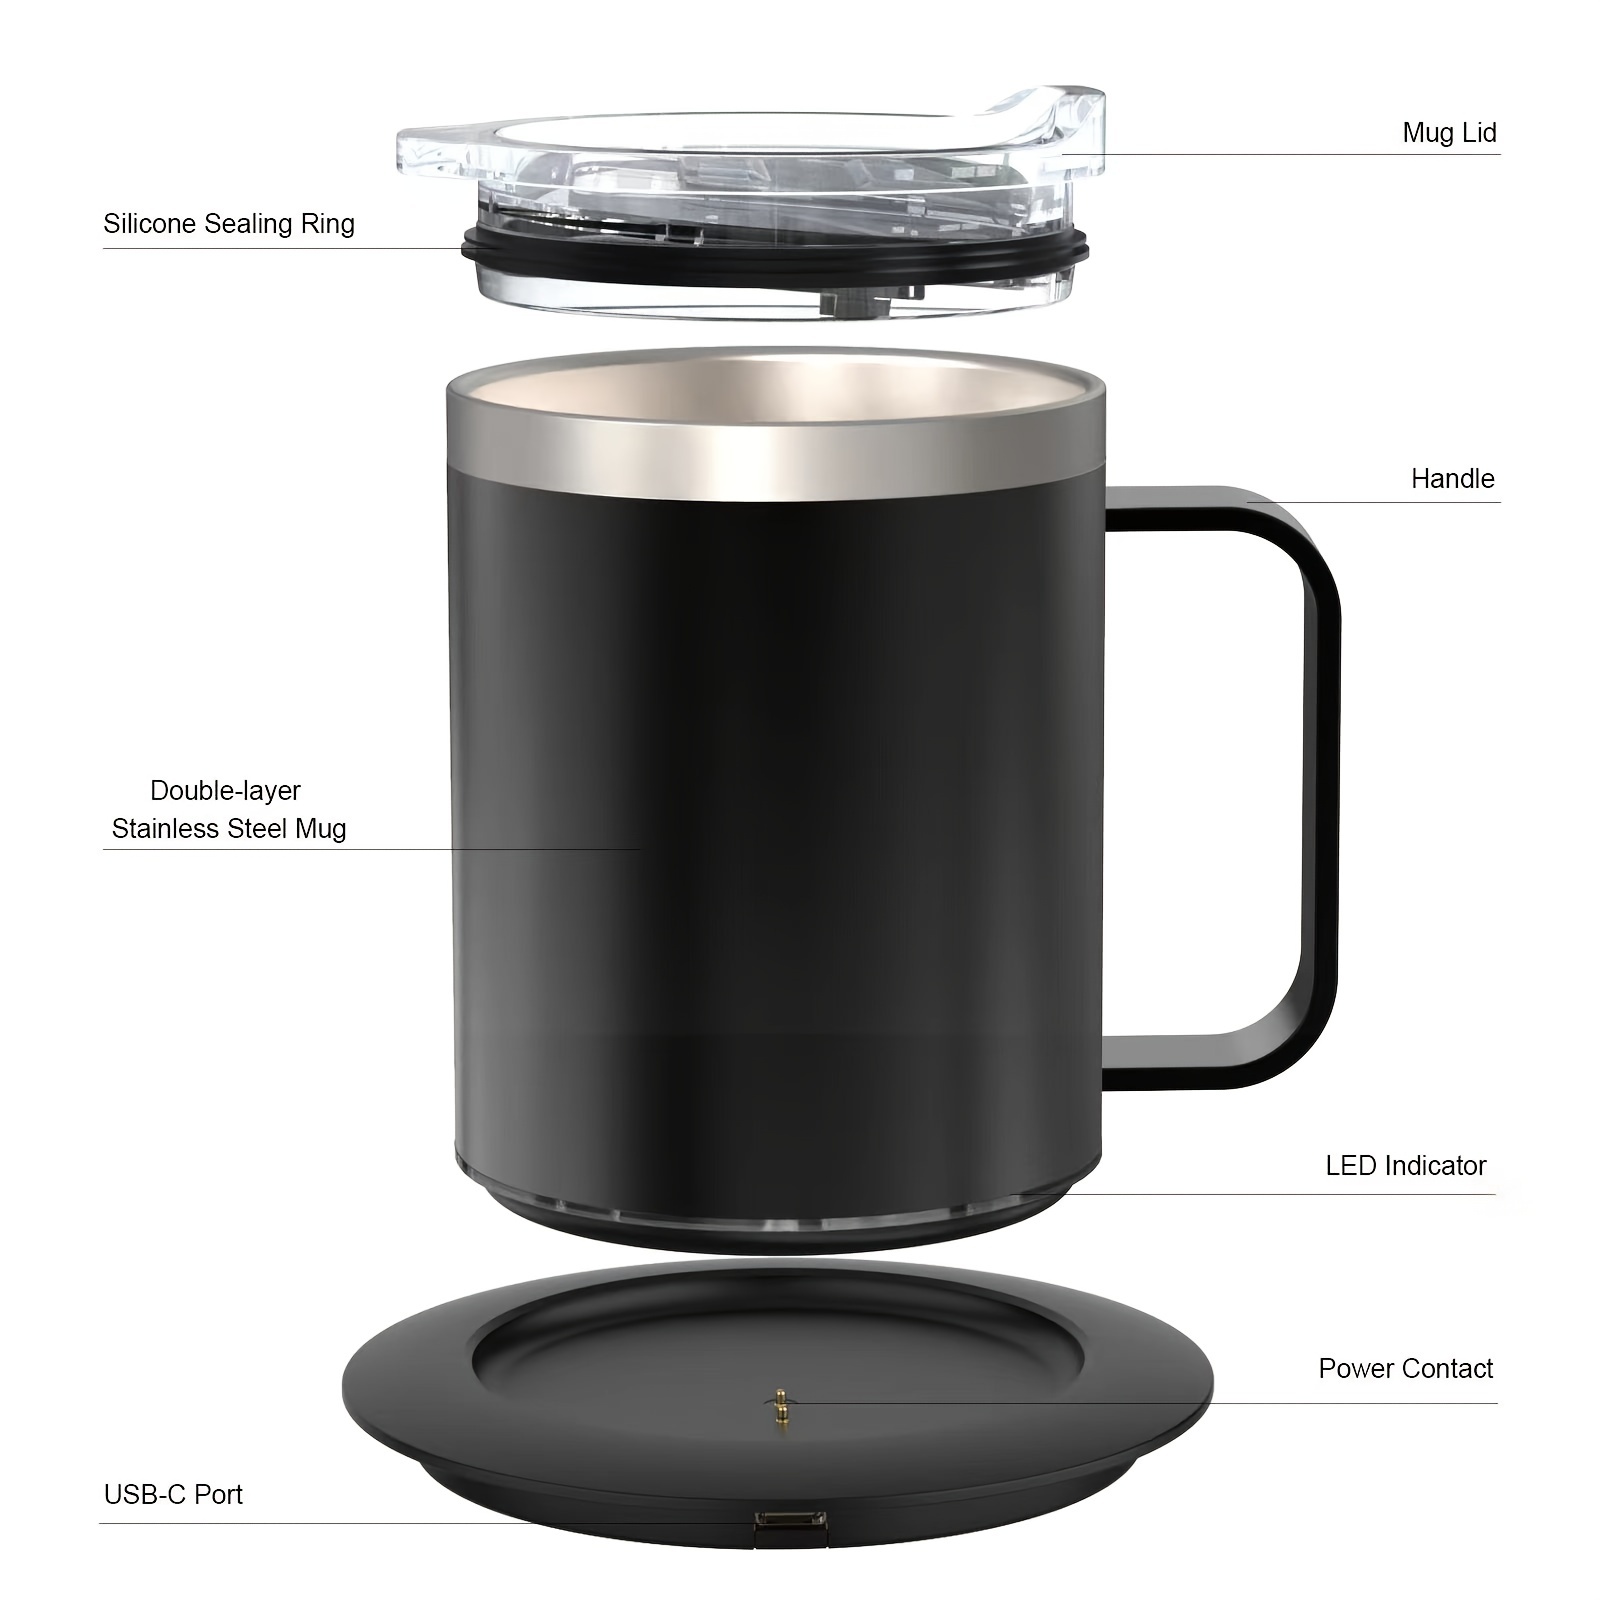 The Jül: Heated Smart Mug for Coffee & Tea by Power Practical